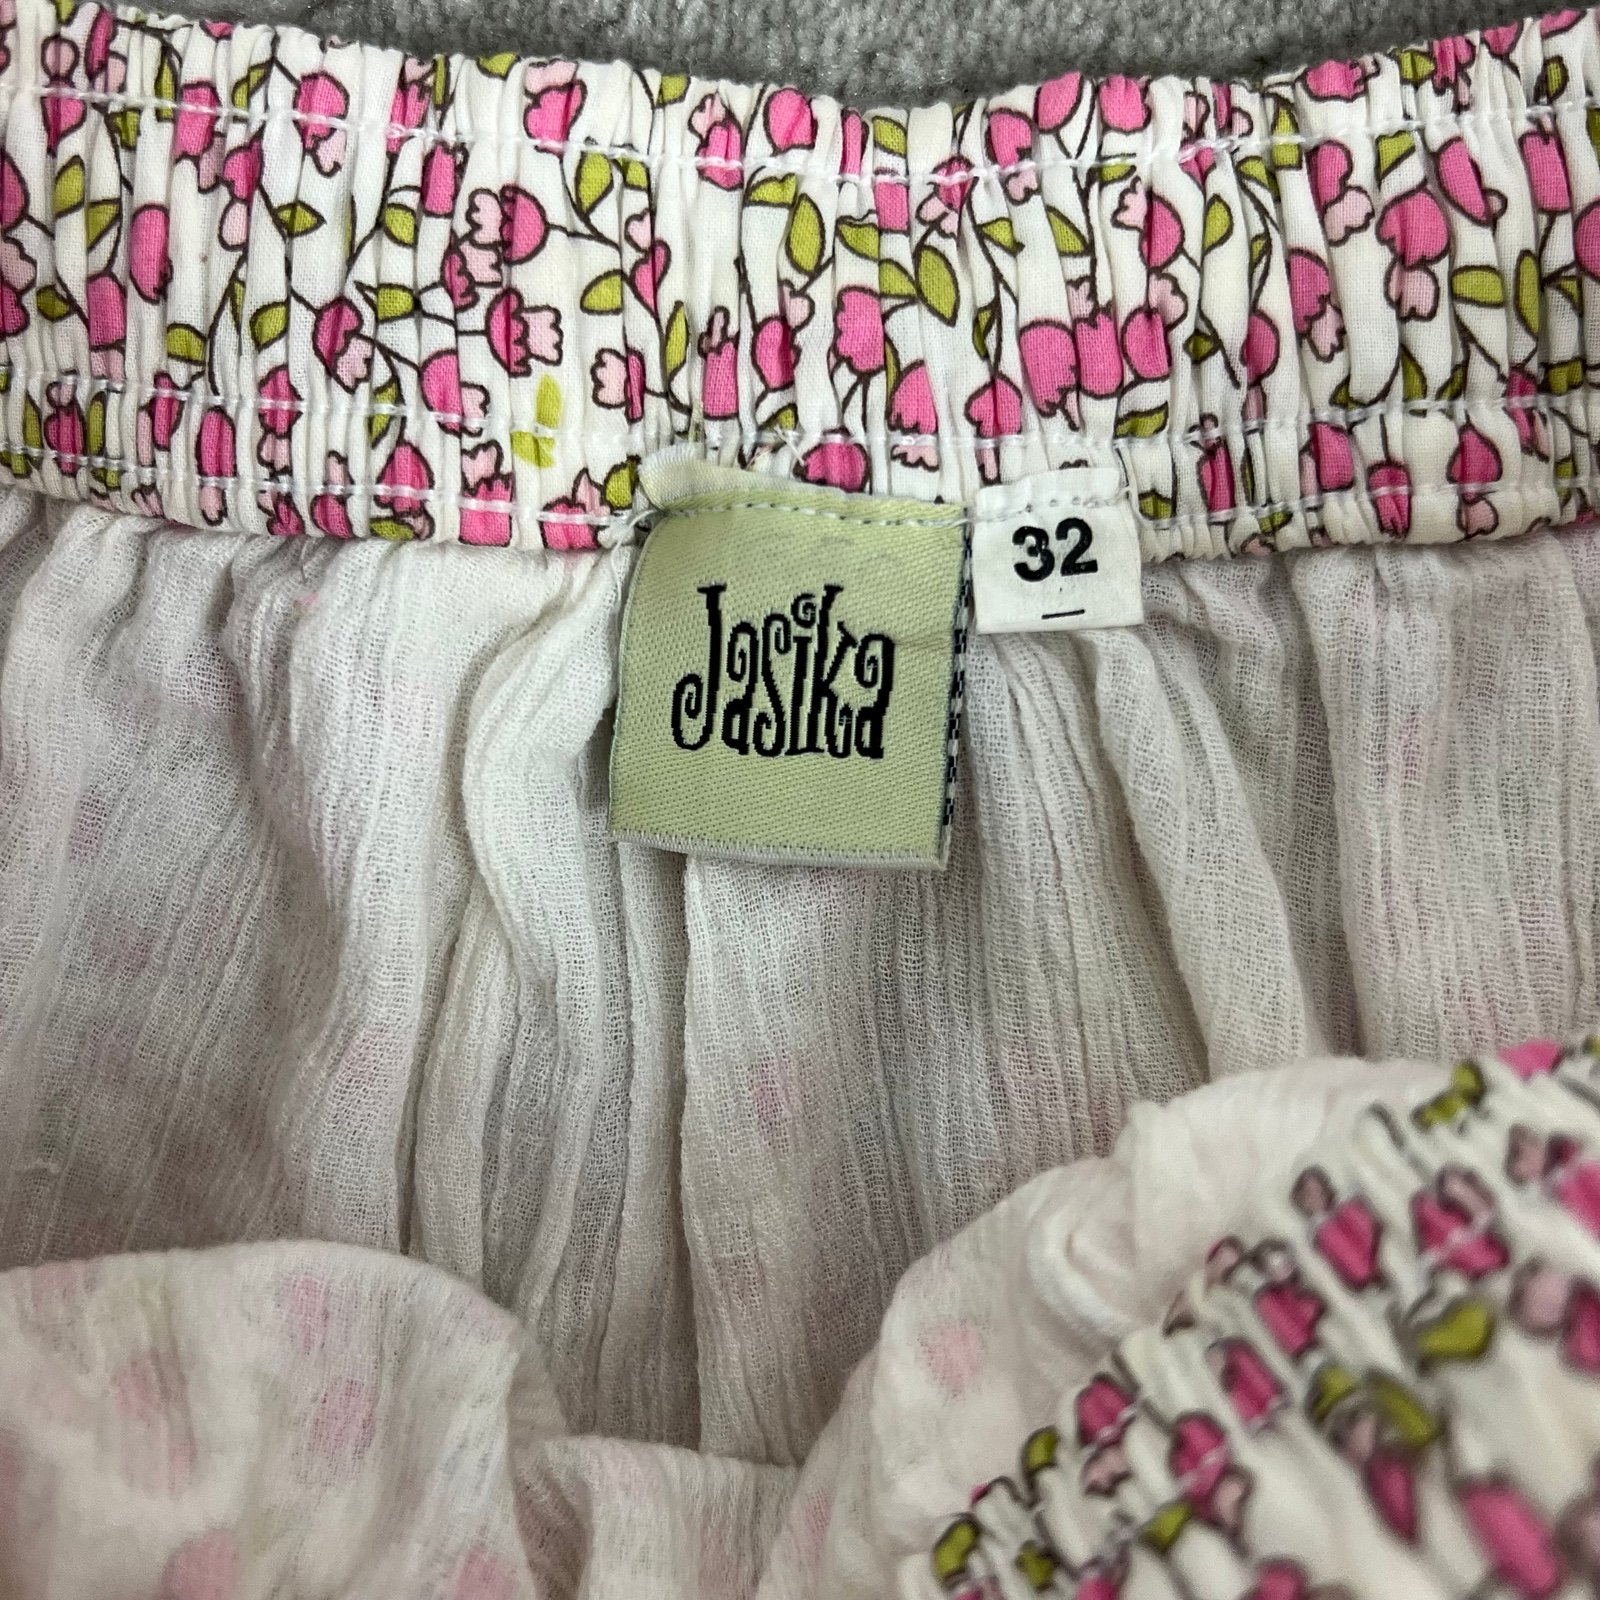 Popular Jasika Ruffle Maxi Skirt Tiered Floral Elastic Waist Fairy Boho Cottage Sz 32 prfNEFx7i Online Shop